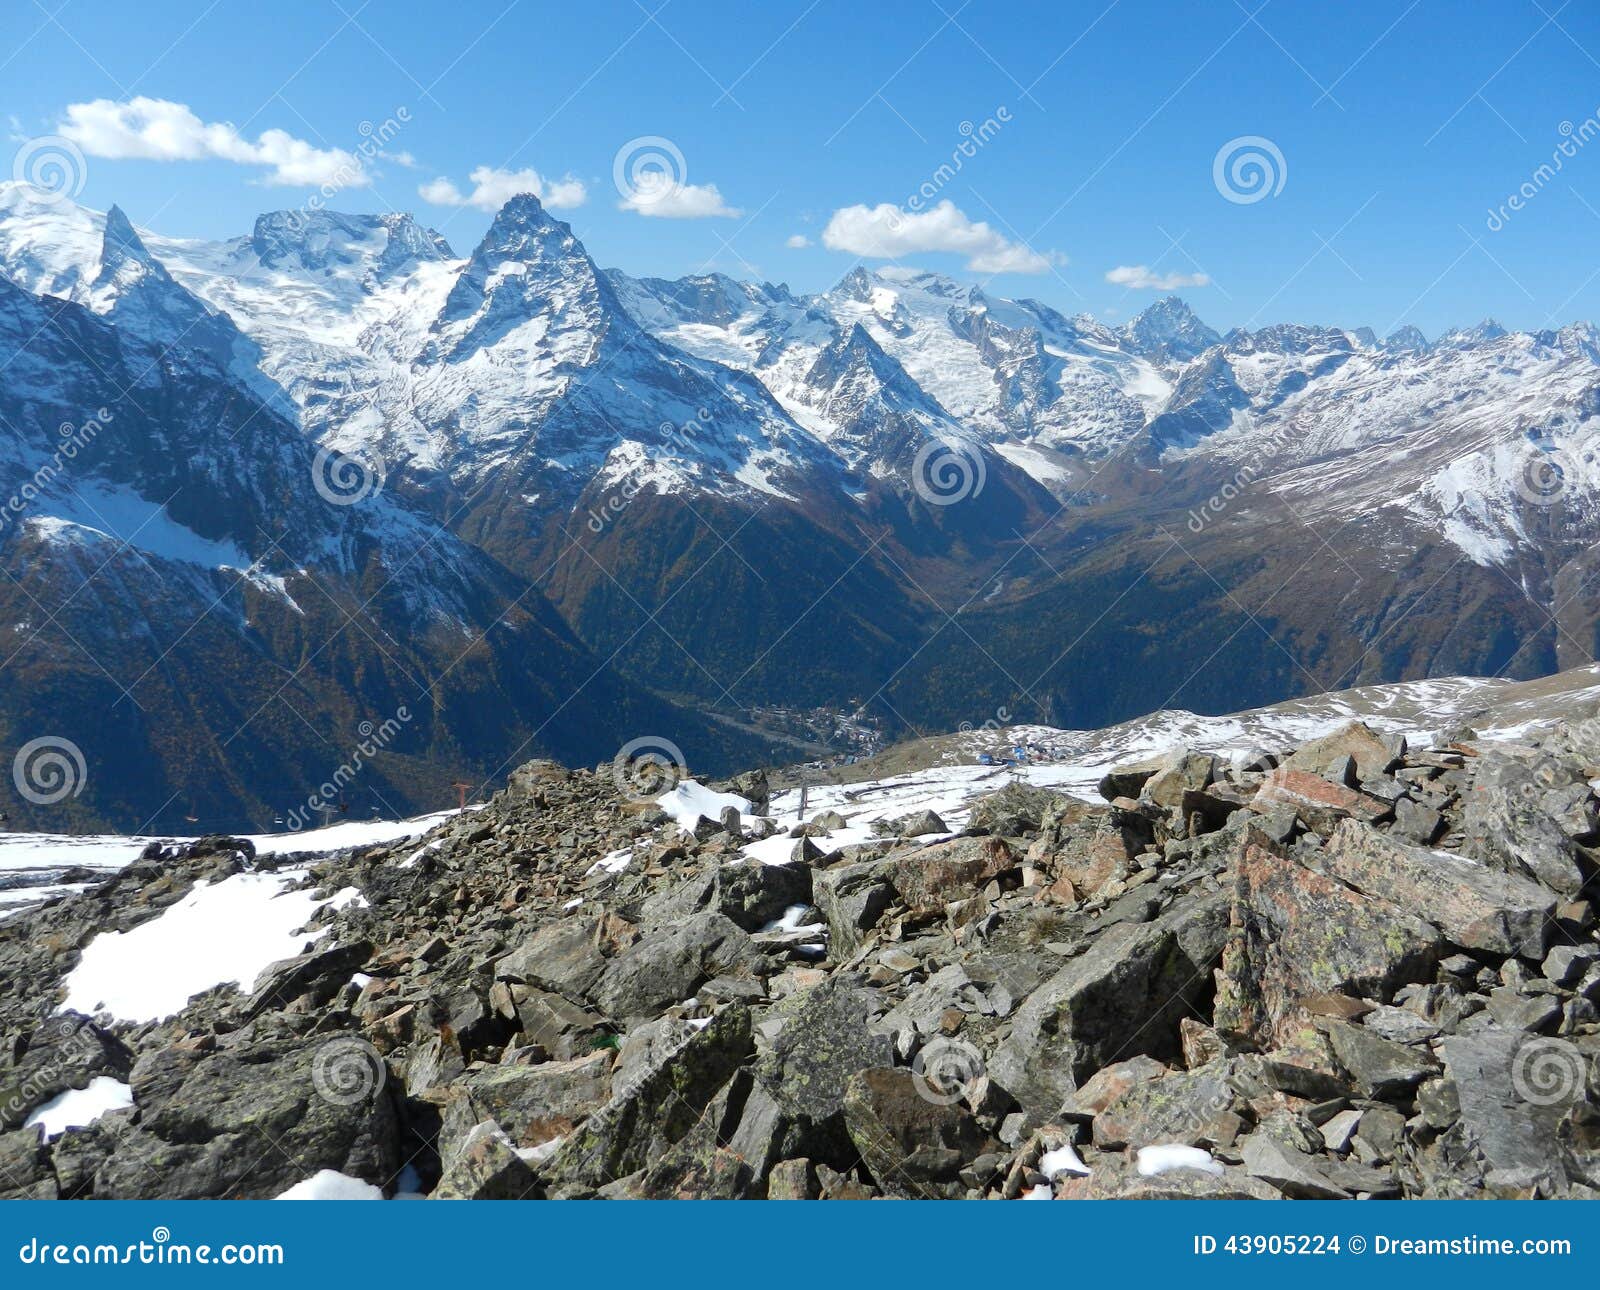 caucas ridge. the mountains, valley and stones.